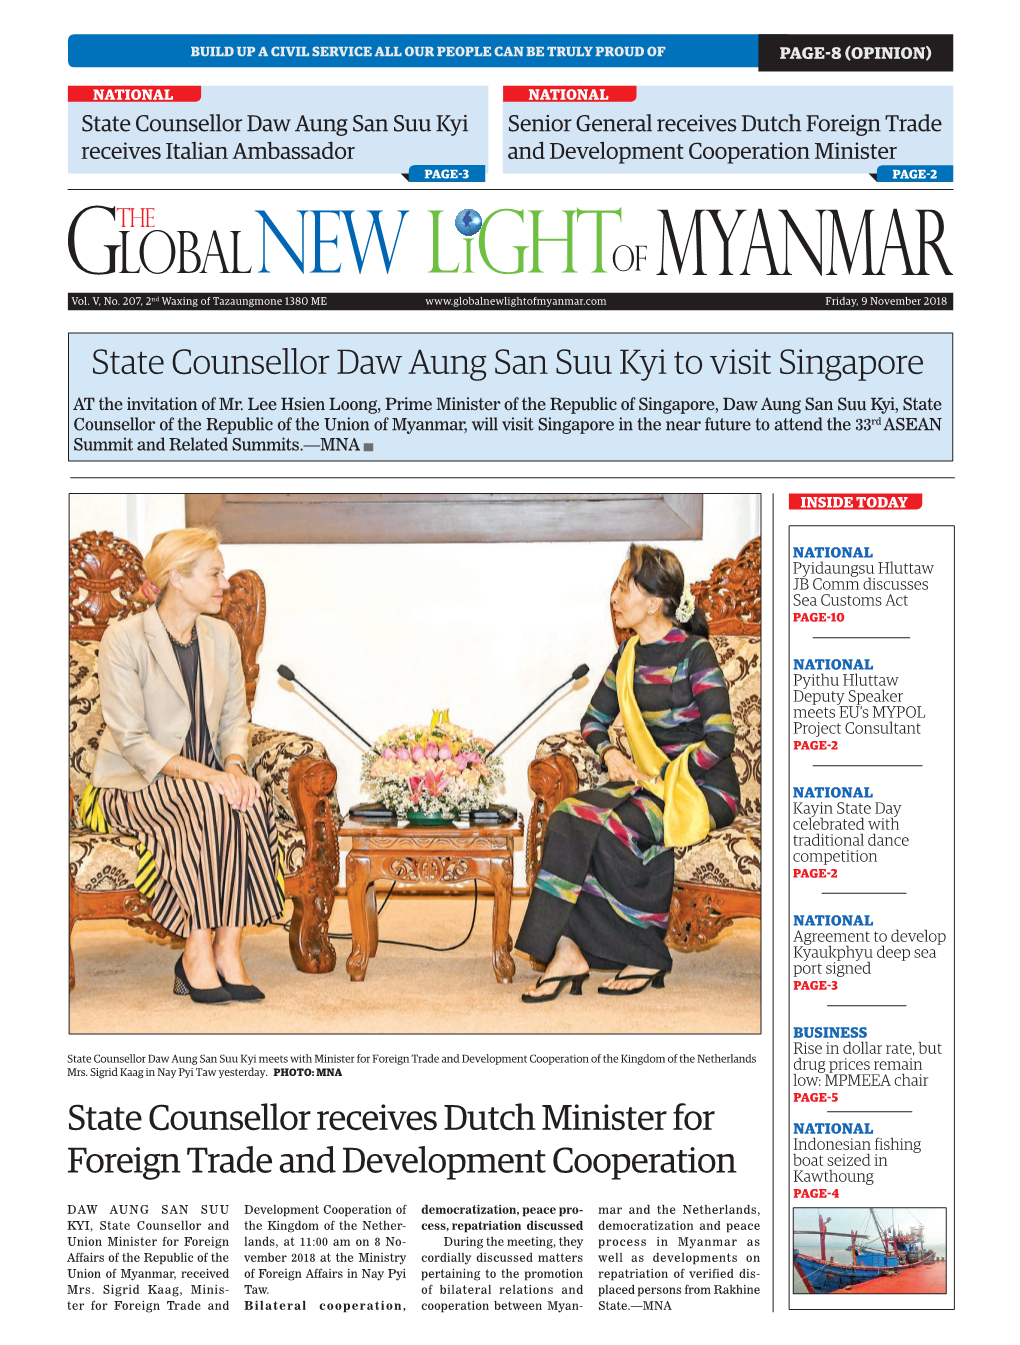 State Counsellor Daw Aung San Suu Kyi to Visit Singapore State